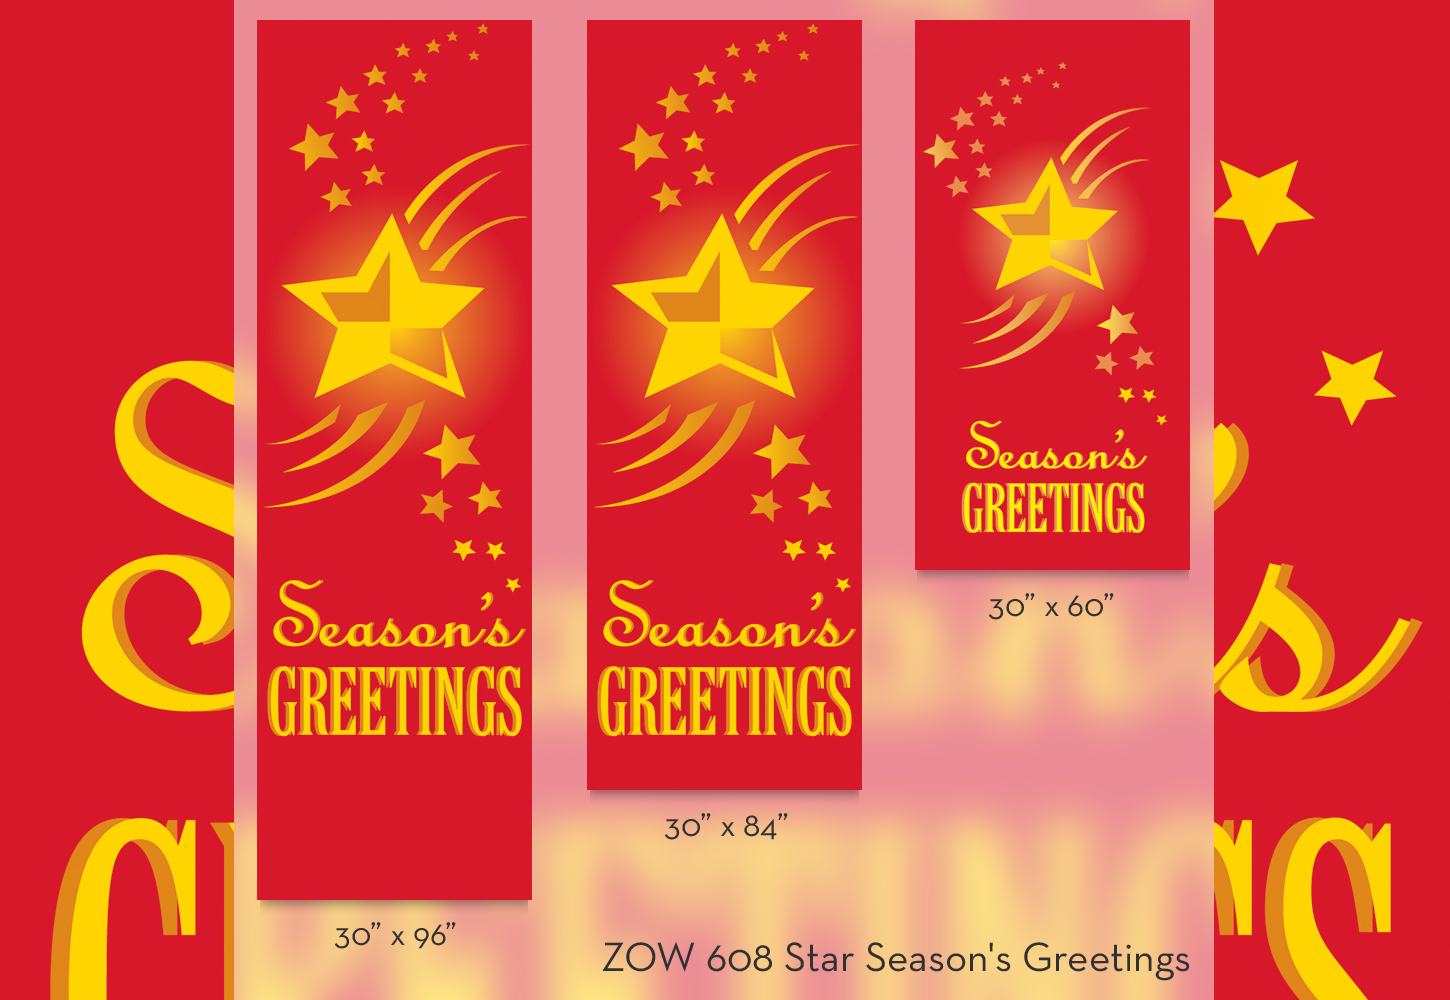 ZOW 608 Star Season's Greetings